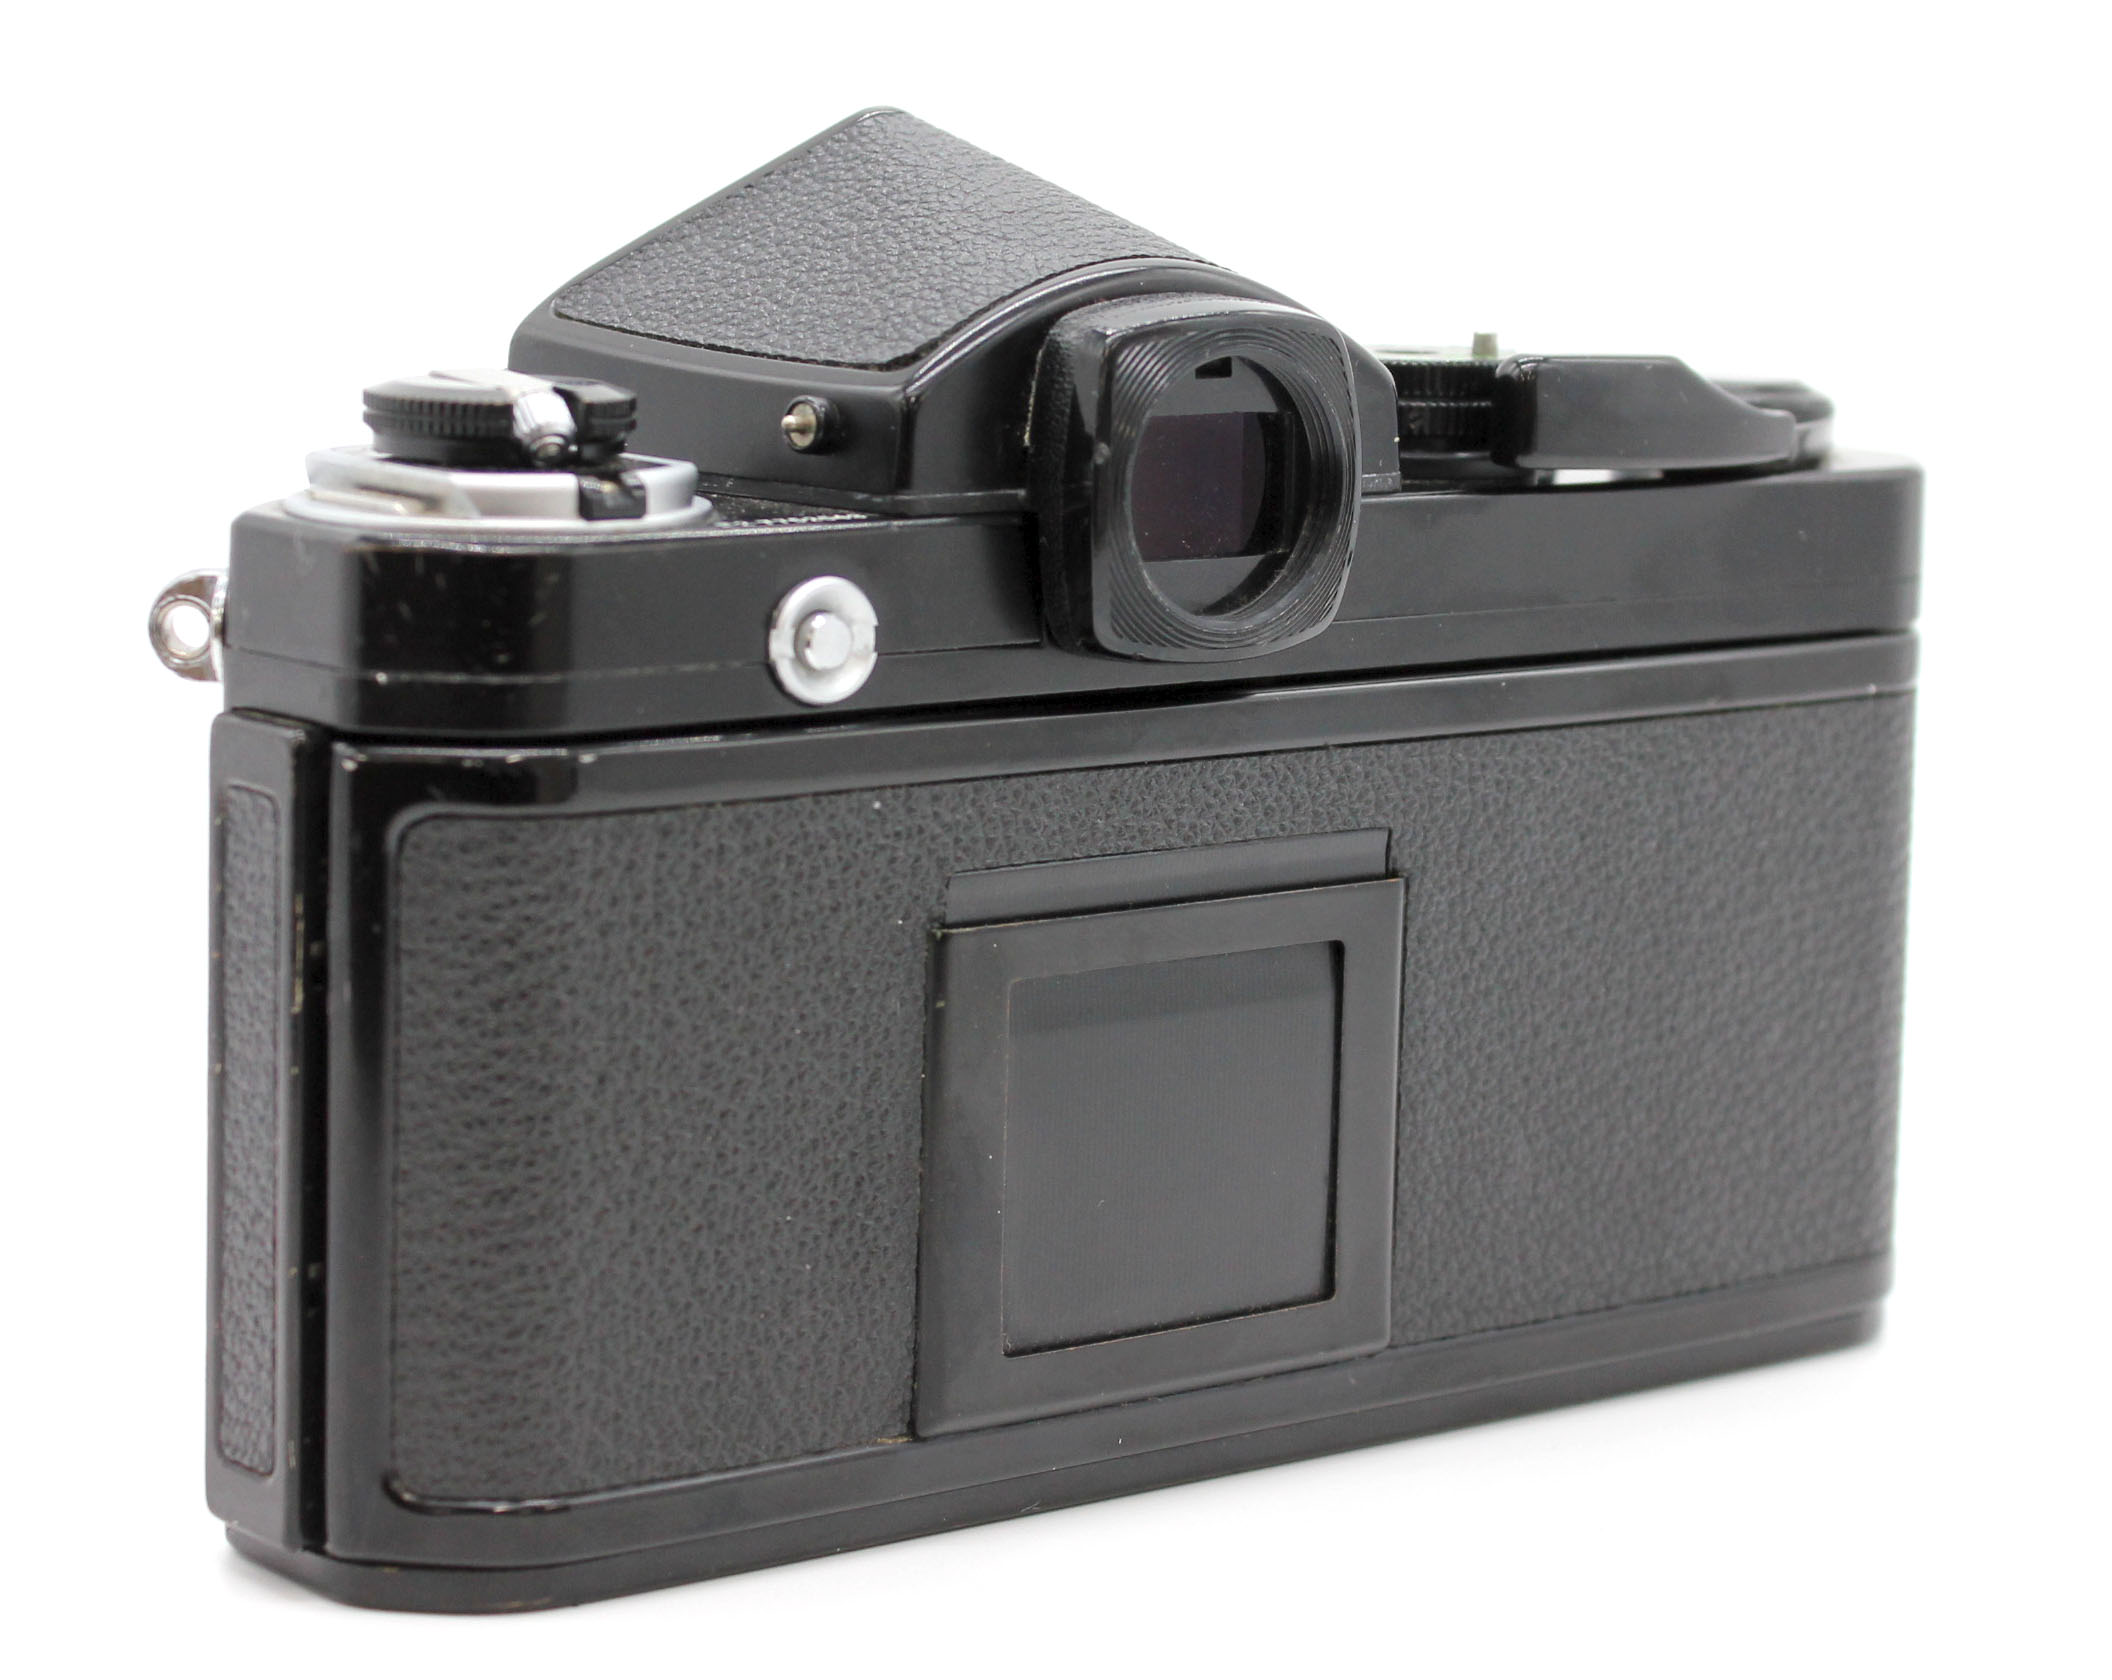  Nikon F2 Eye Level DE-1 Black 35mm SLR Film Camera from Japan Photo 4